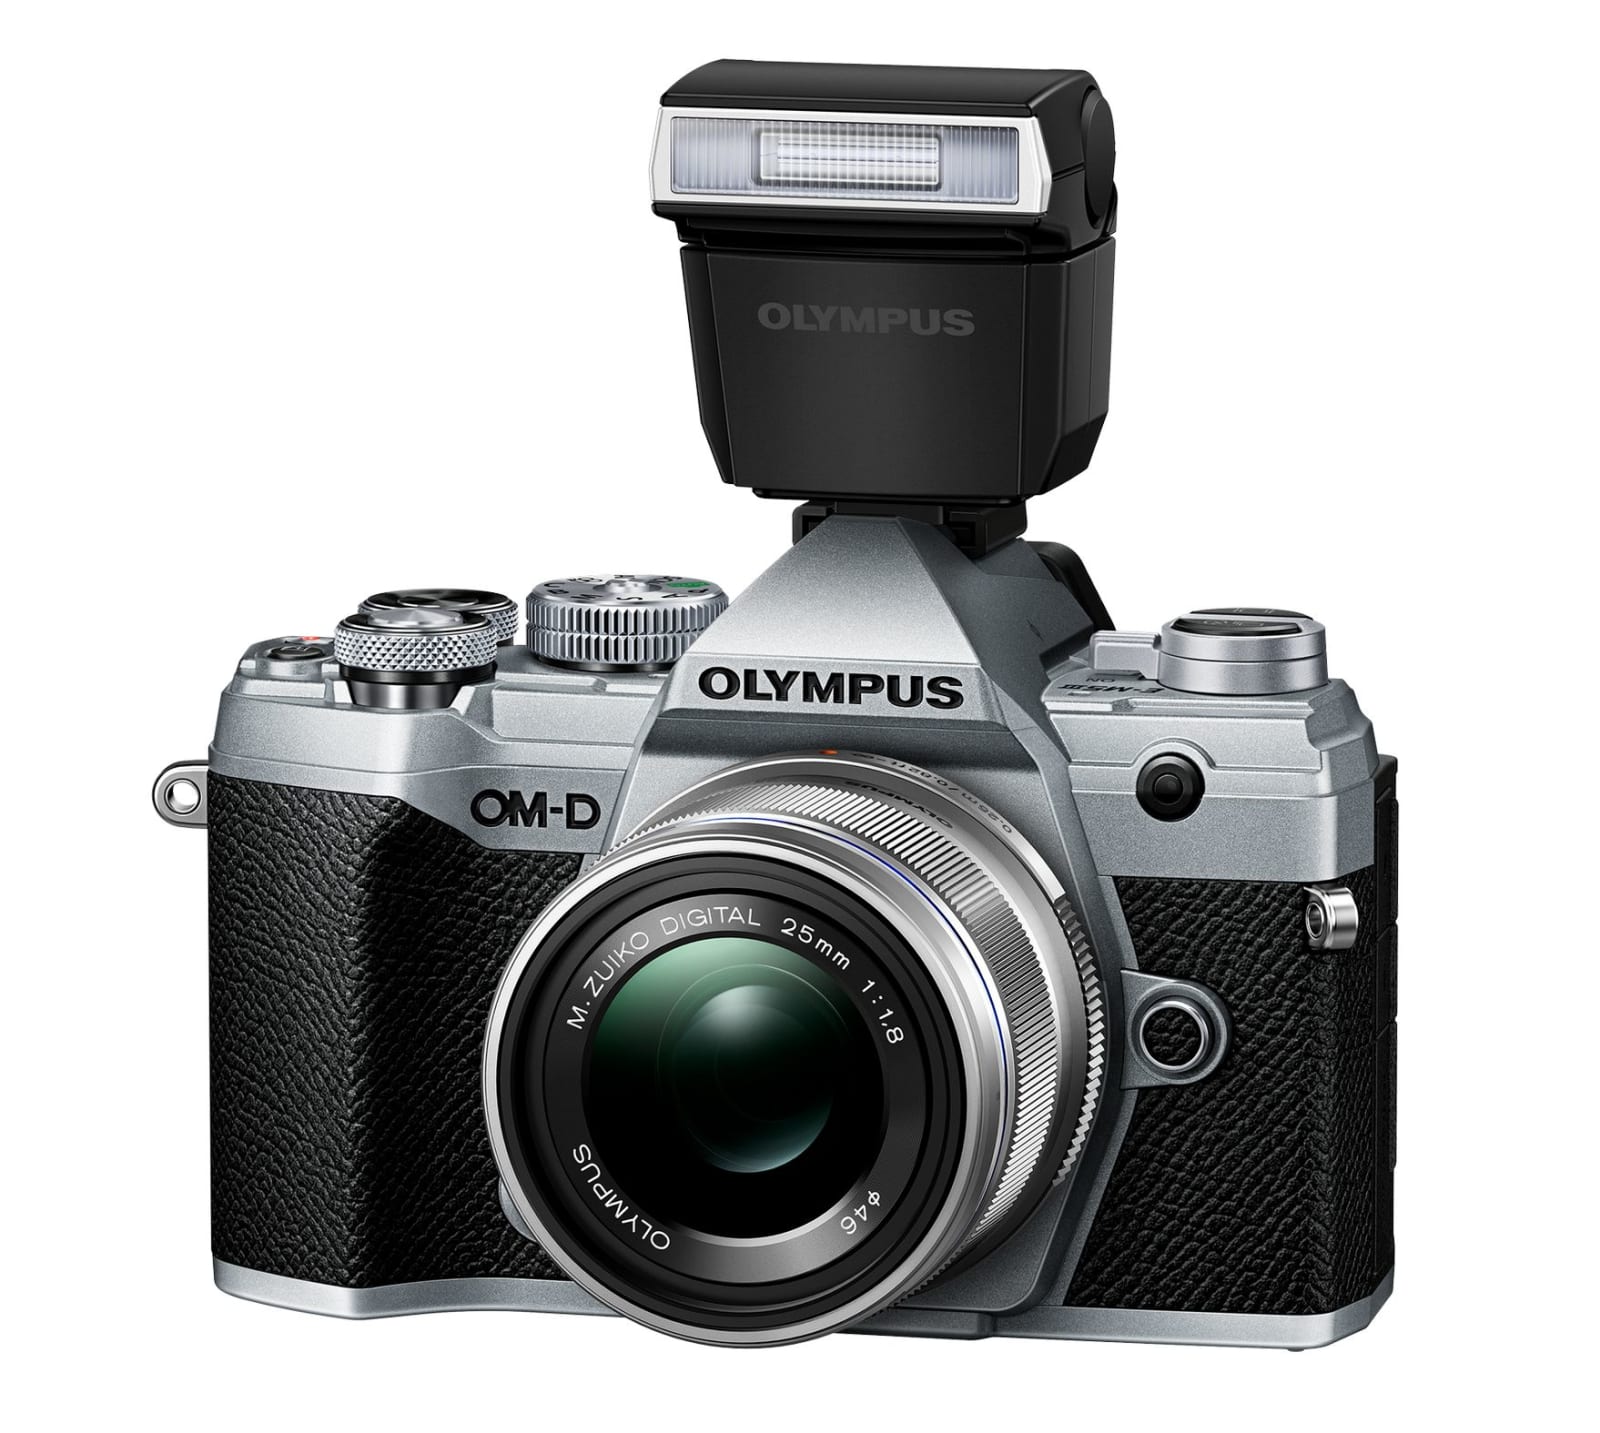 Olympus O-MD E-M5 Mark III Micro Four Thirds mirrorless camera